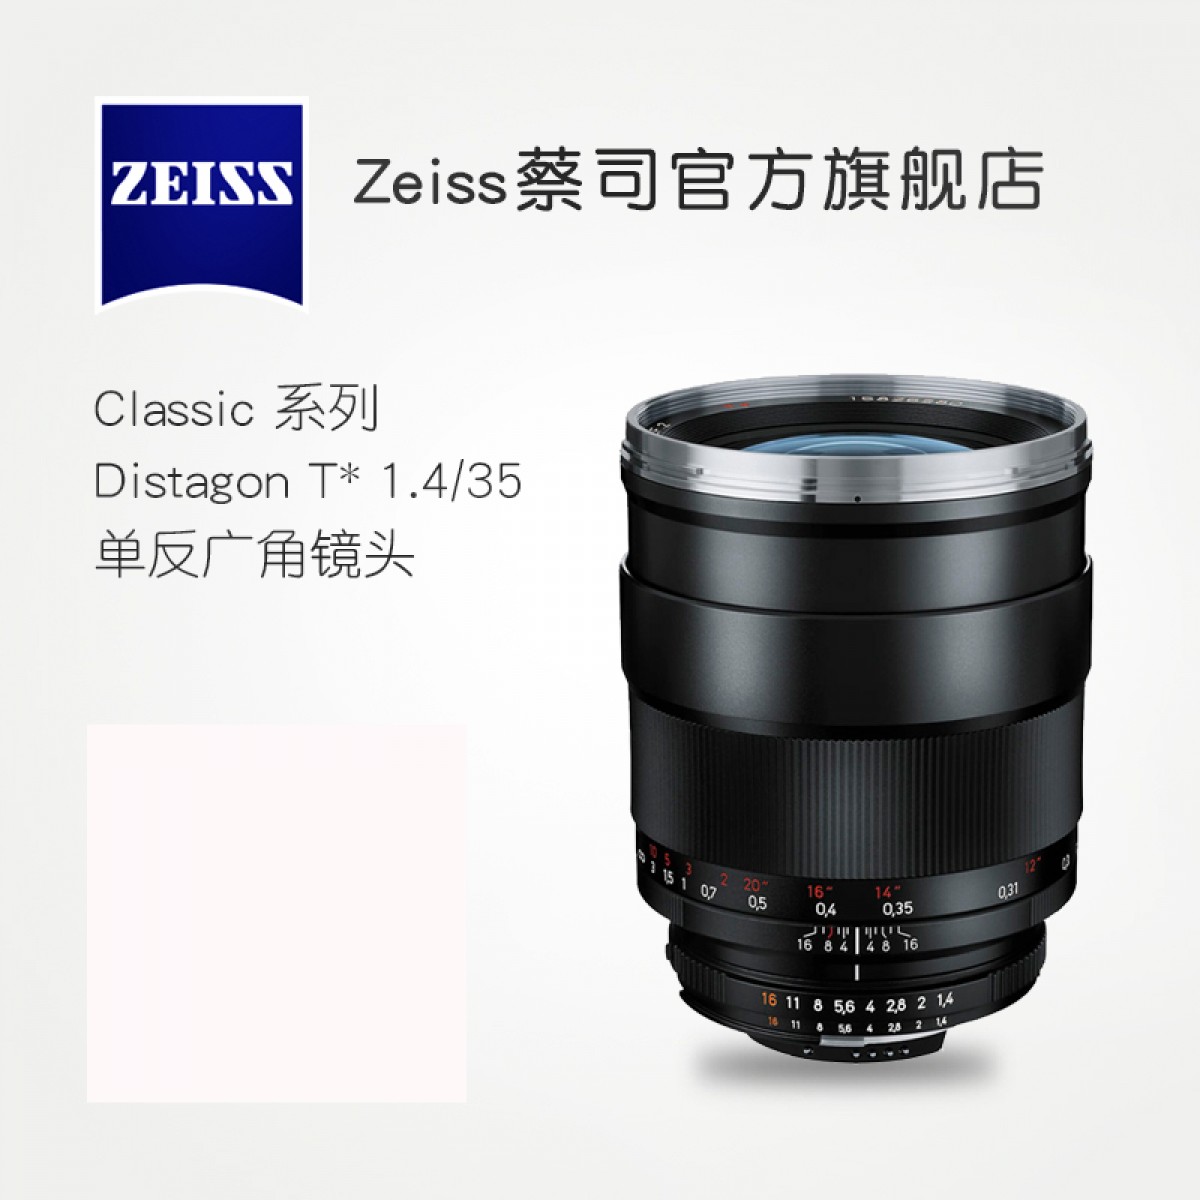 ZEISS/蔡司 Distagon T* 1.4/35mm ZF.2 尼康口单反广角镜头